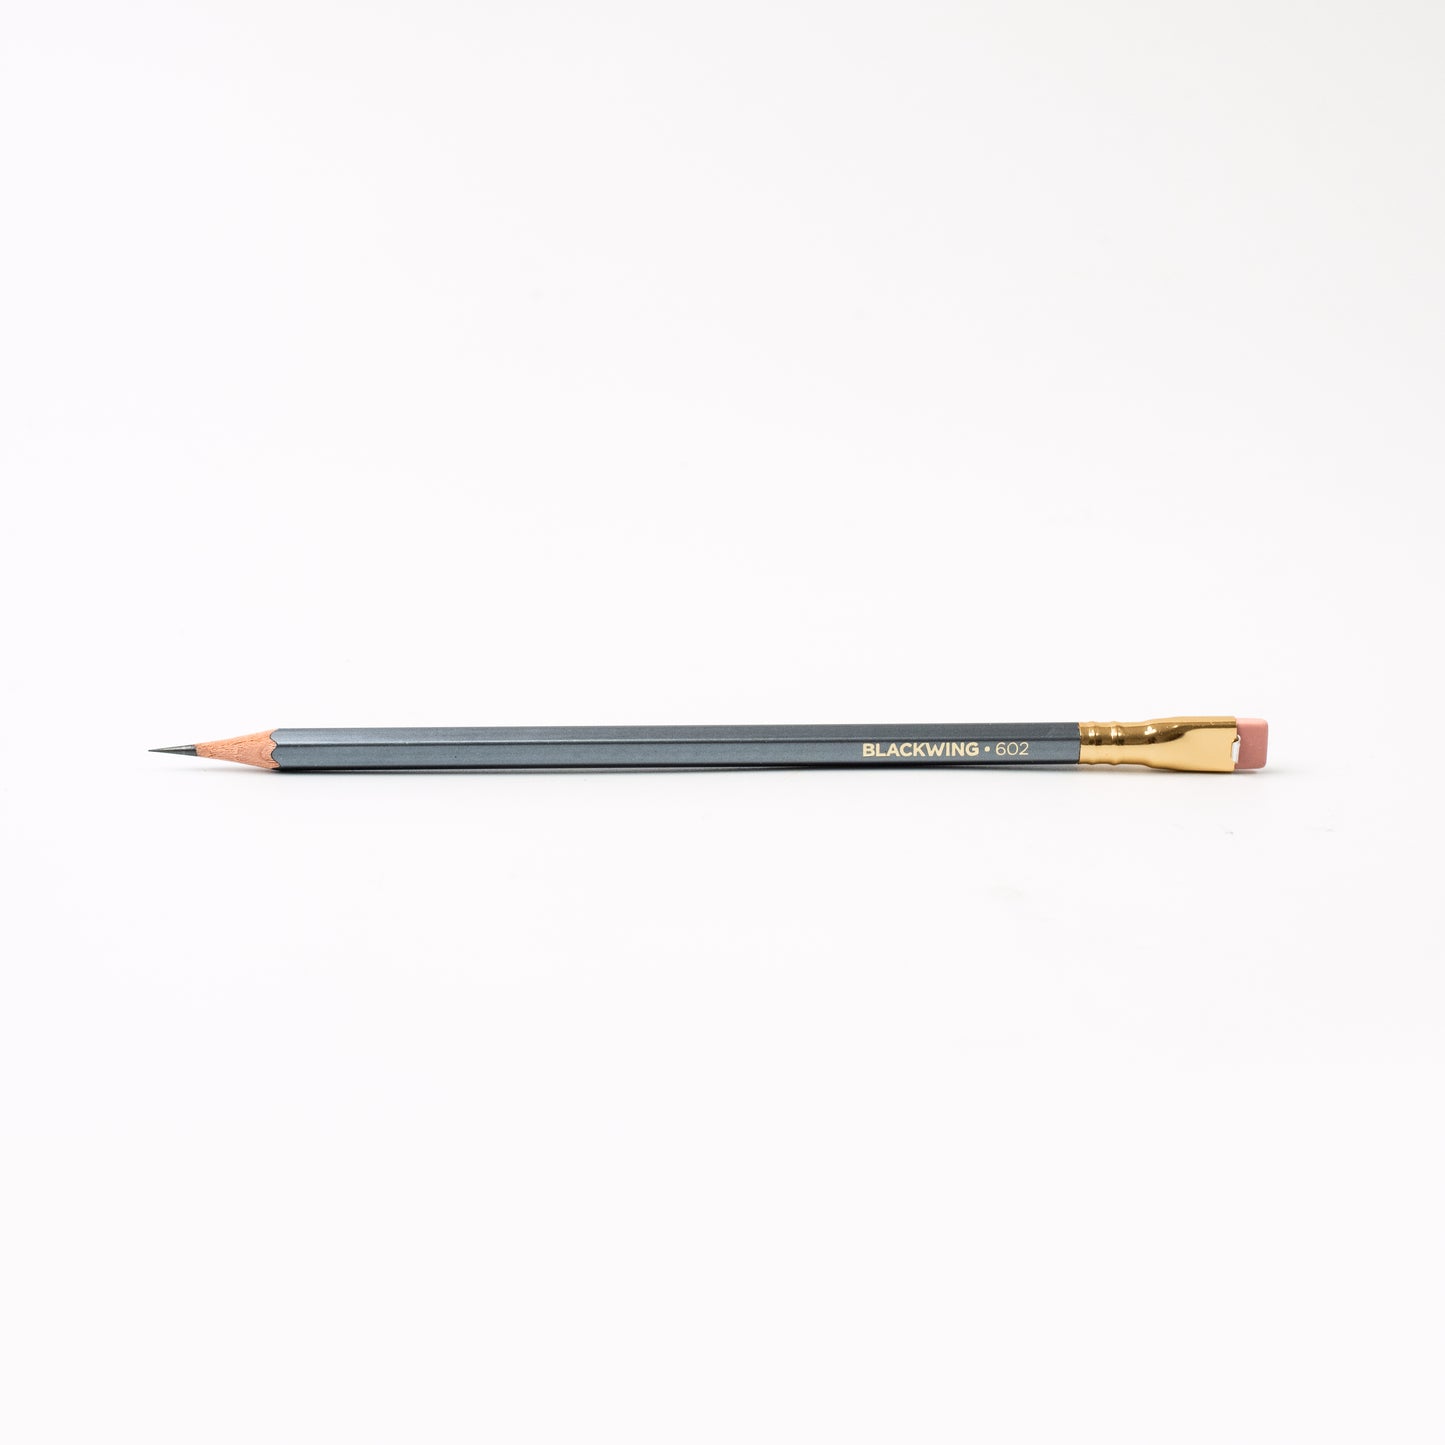 blackwing 602 pencil